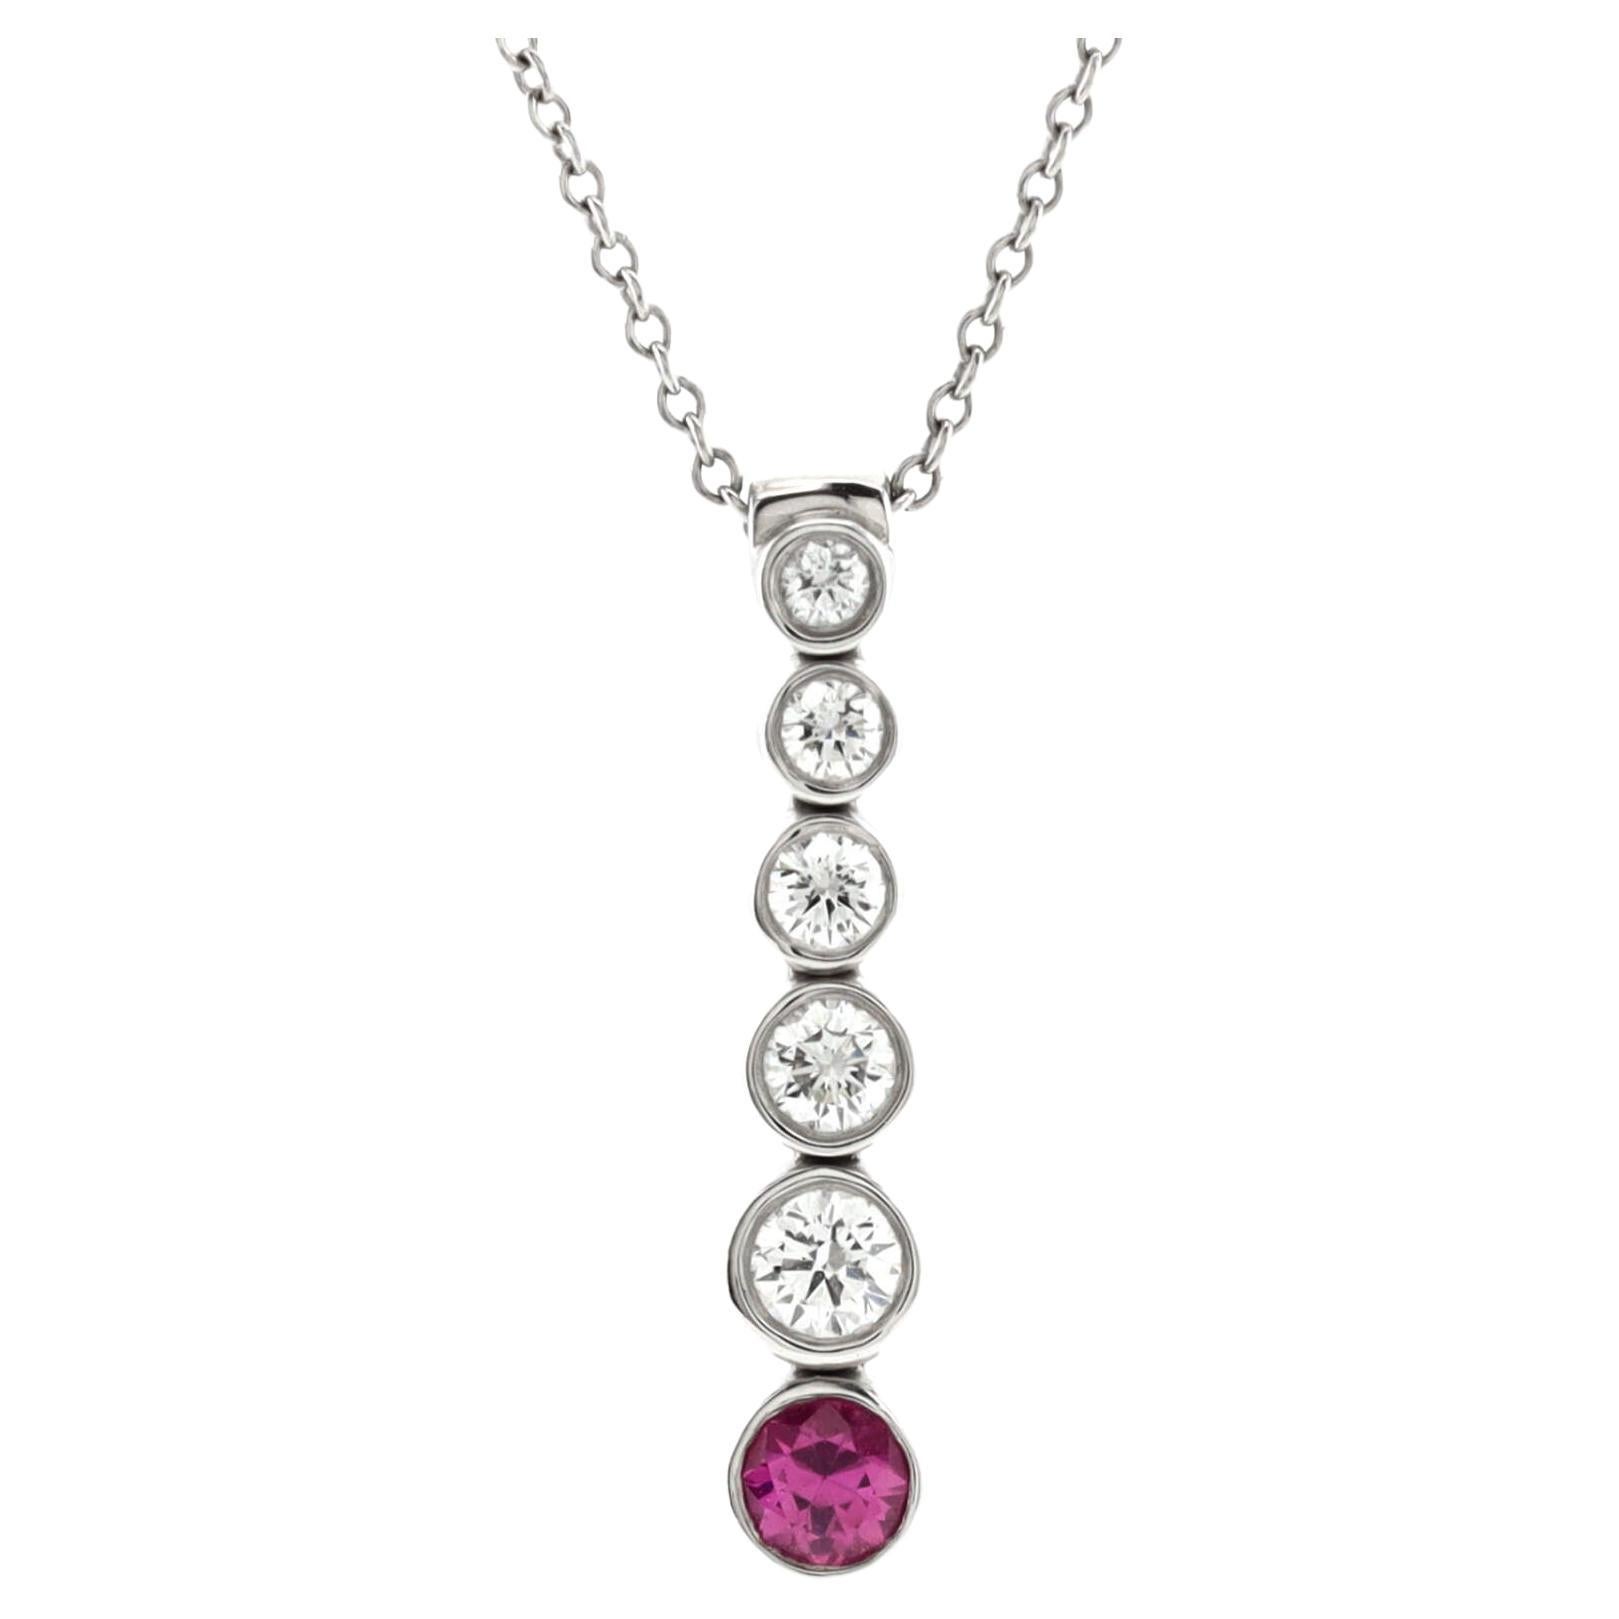 Tiffany & Co. Jazz Graduated Drop Pendant Necklace Platinum with Diamonds